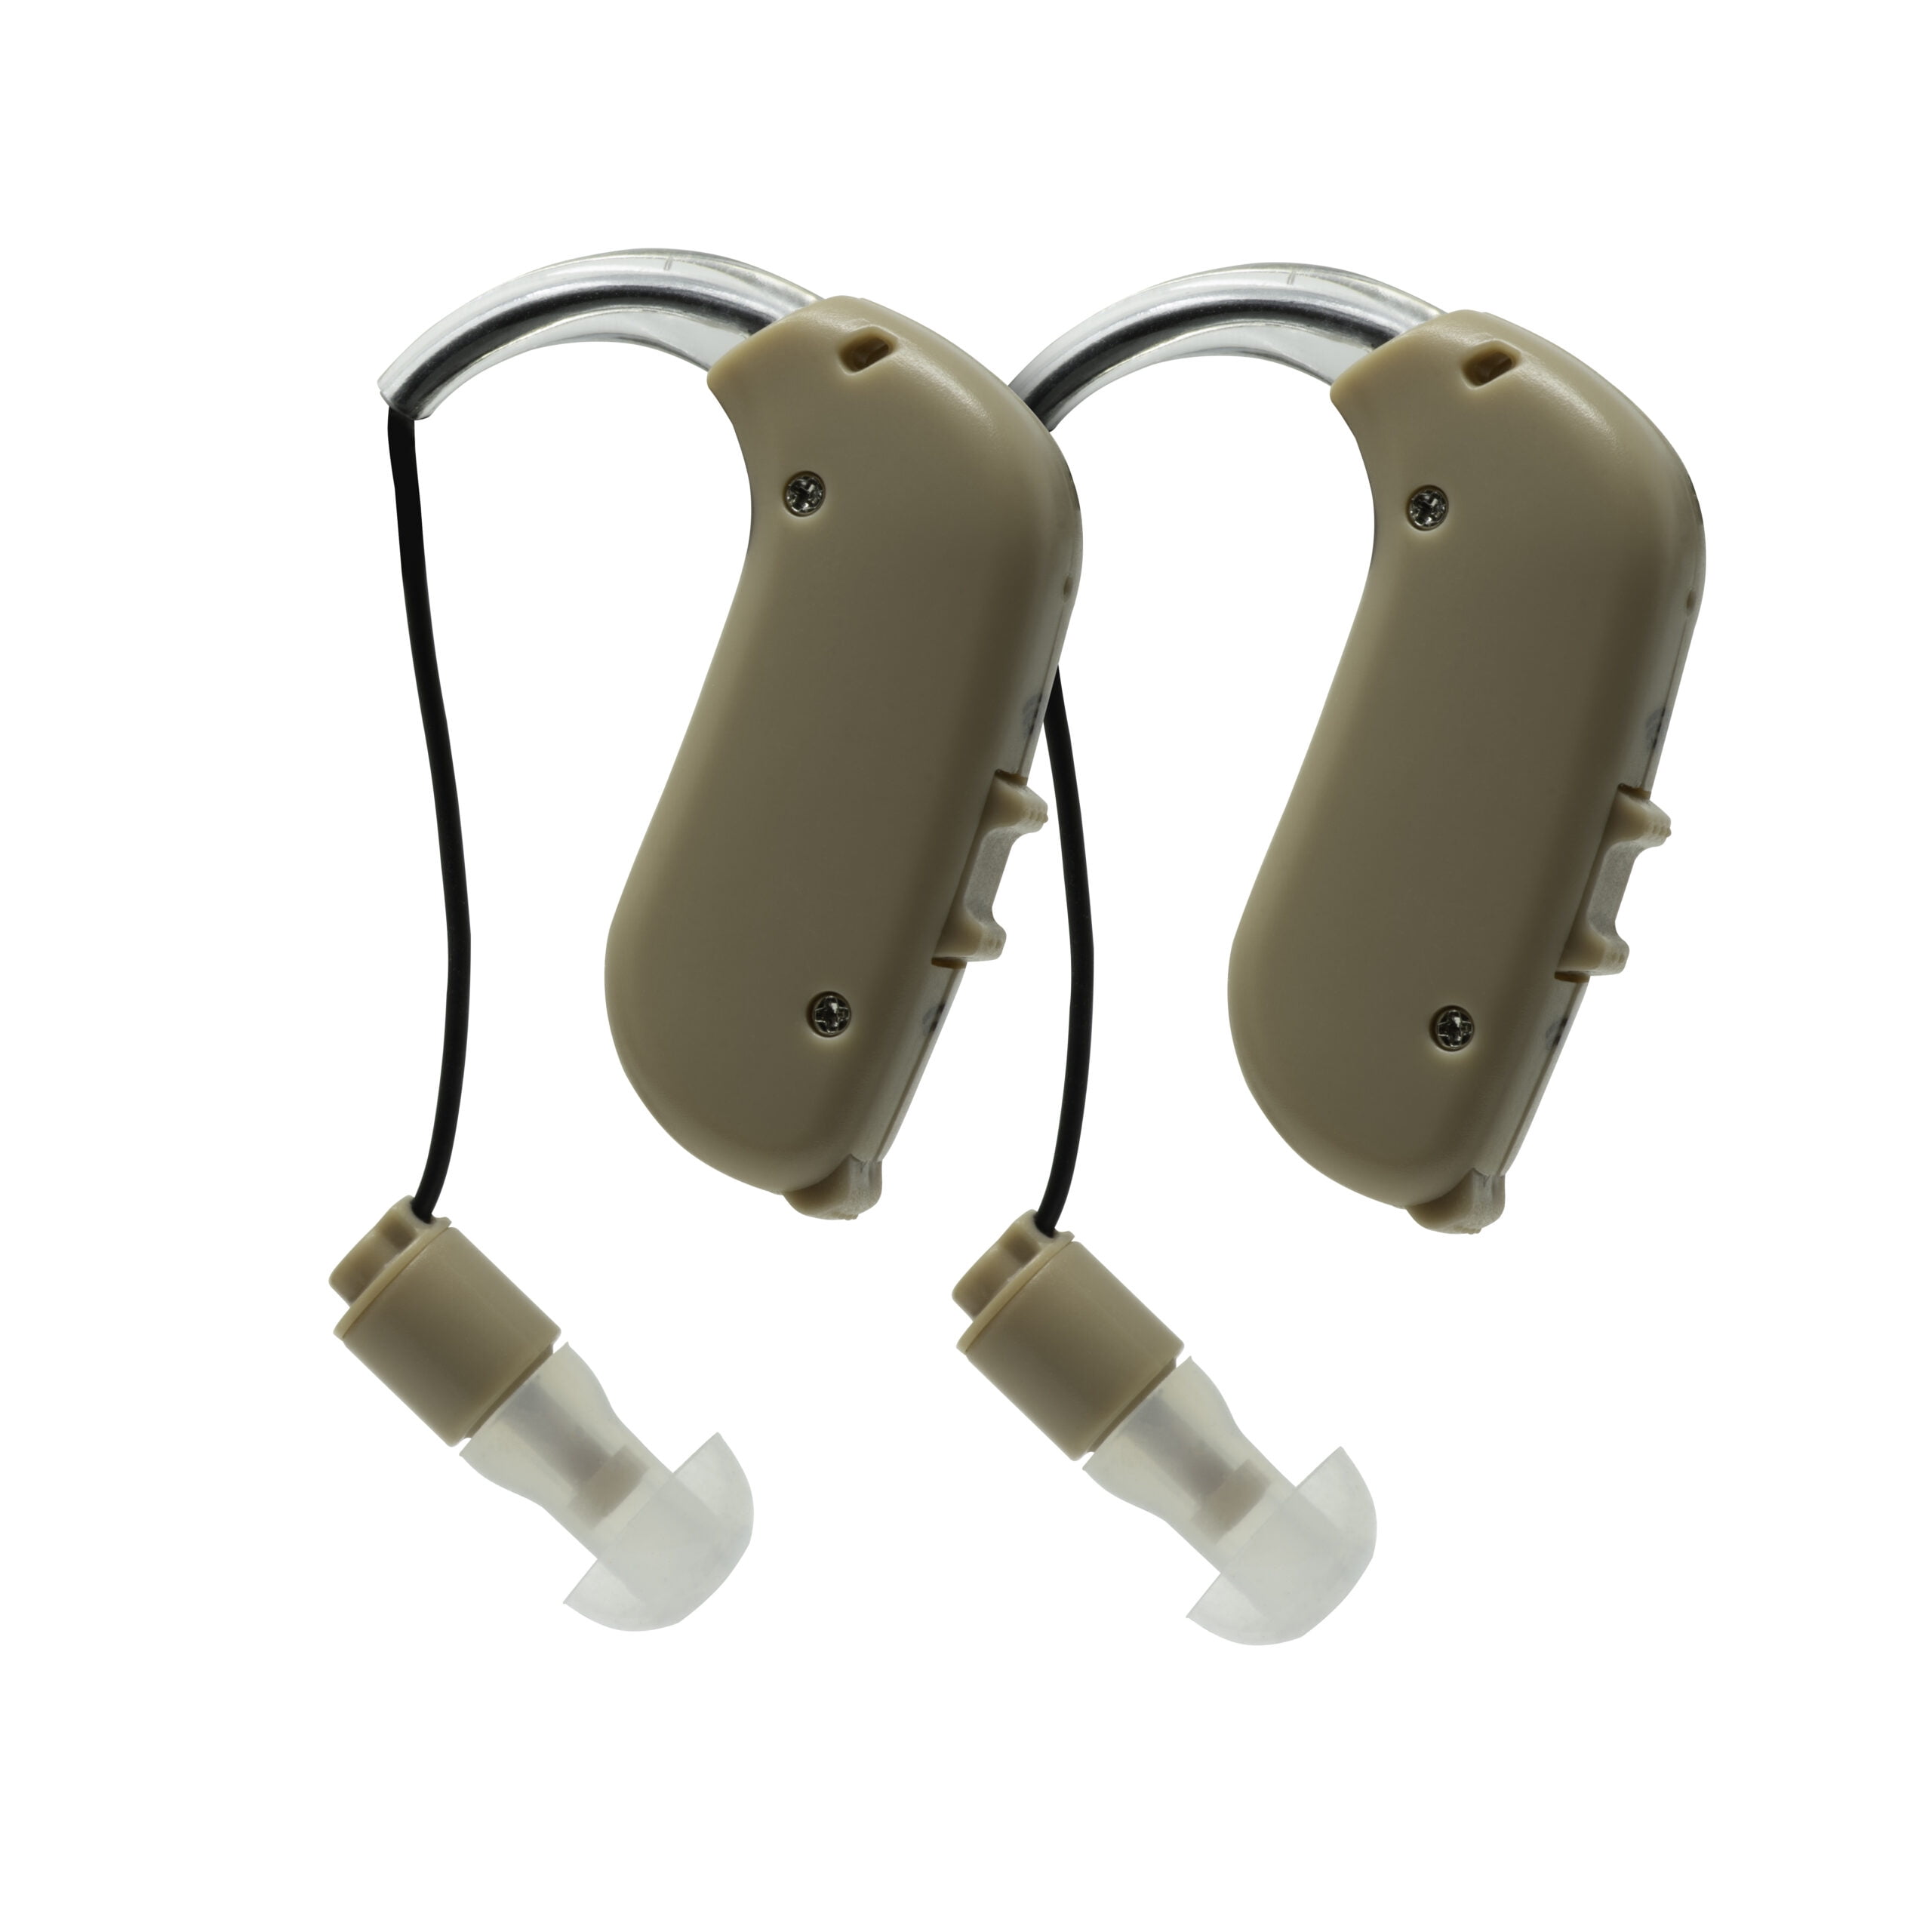 Ear Basics Personal Sound Amplifier Single | CVS